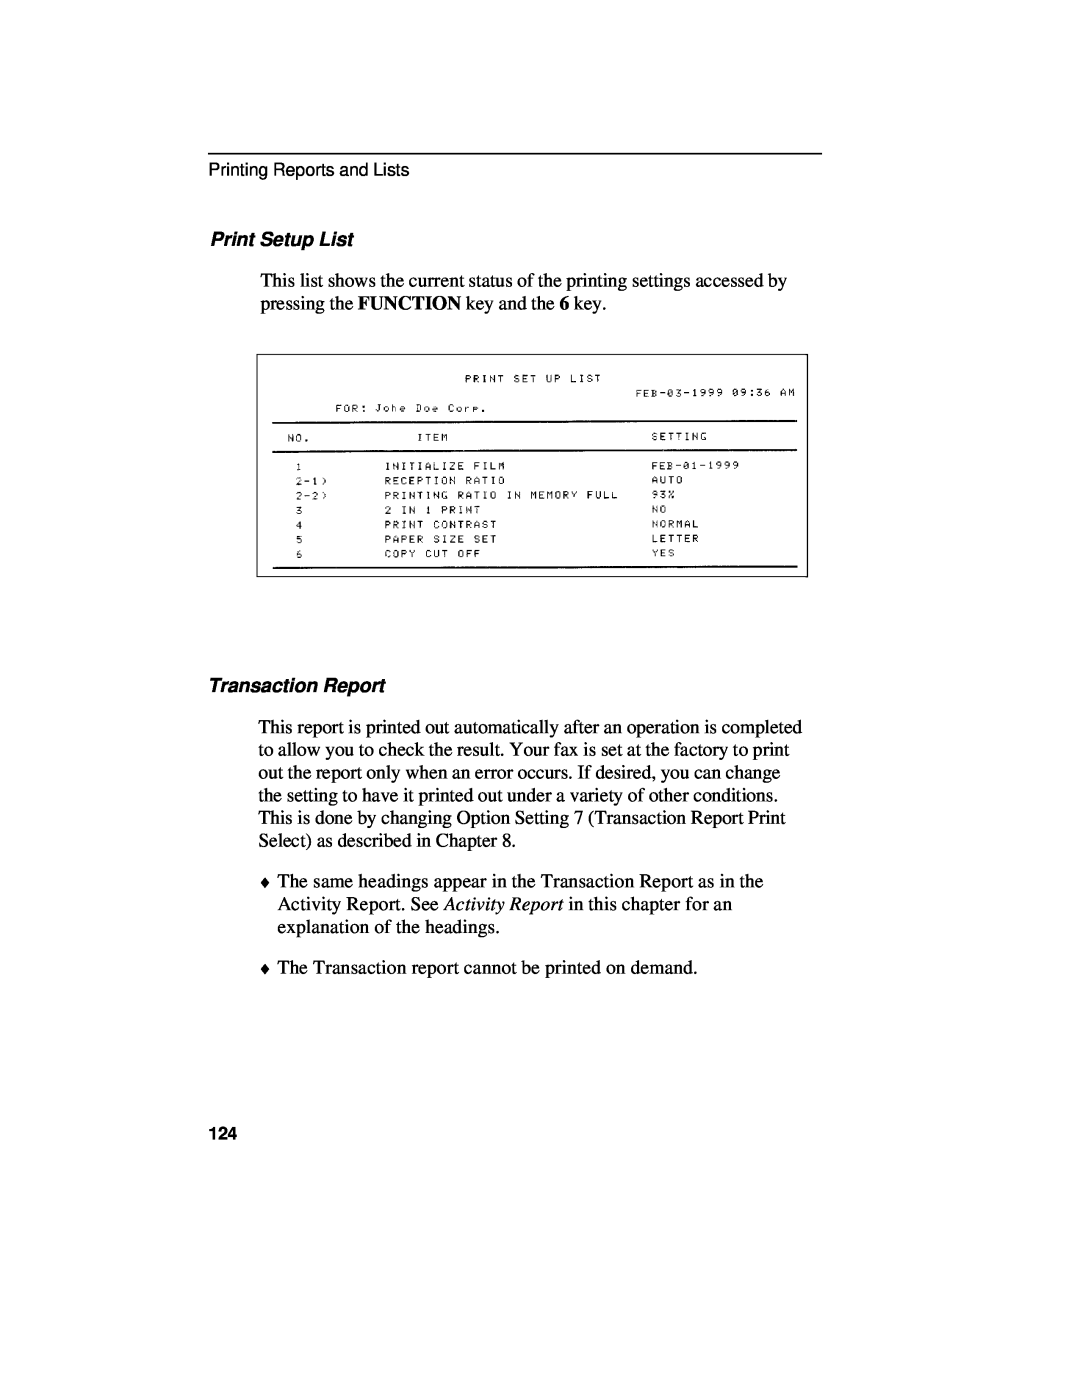 Sharp UX-460 operation manual Print Setup List, Transaction Report 